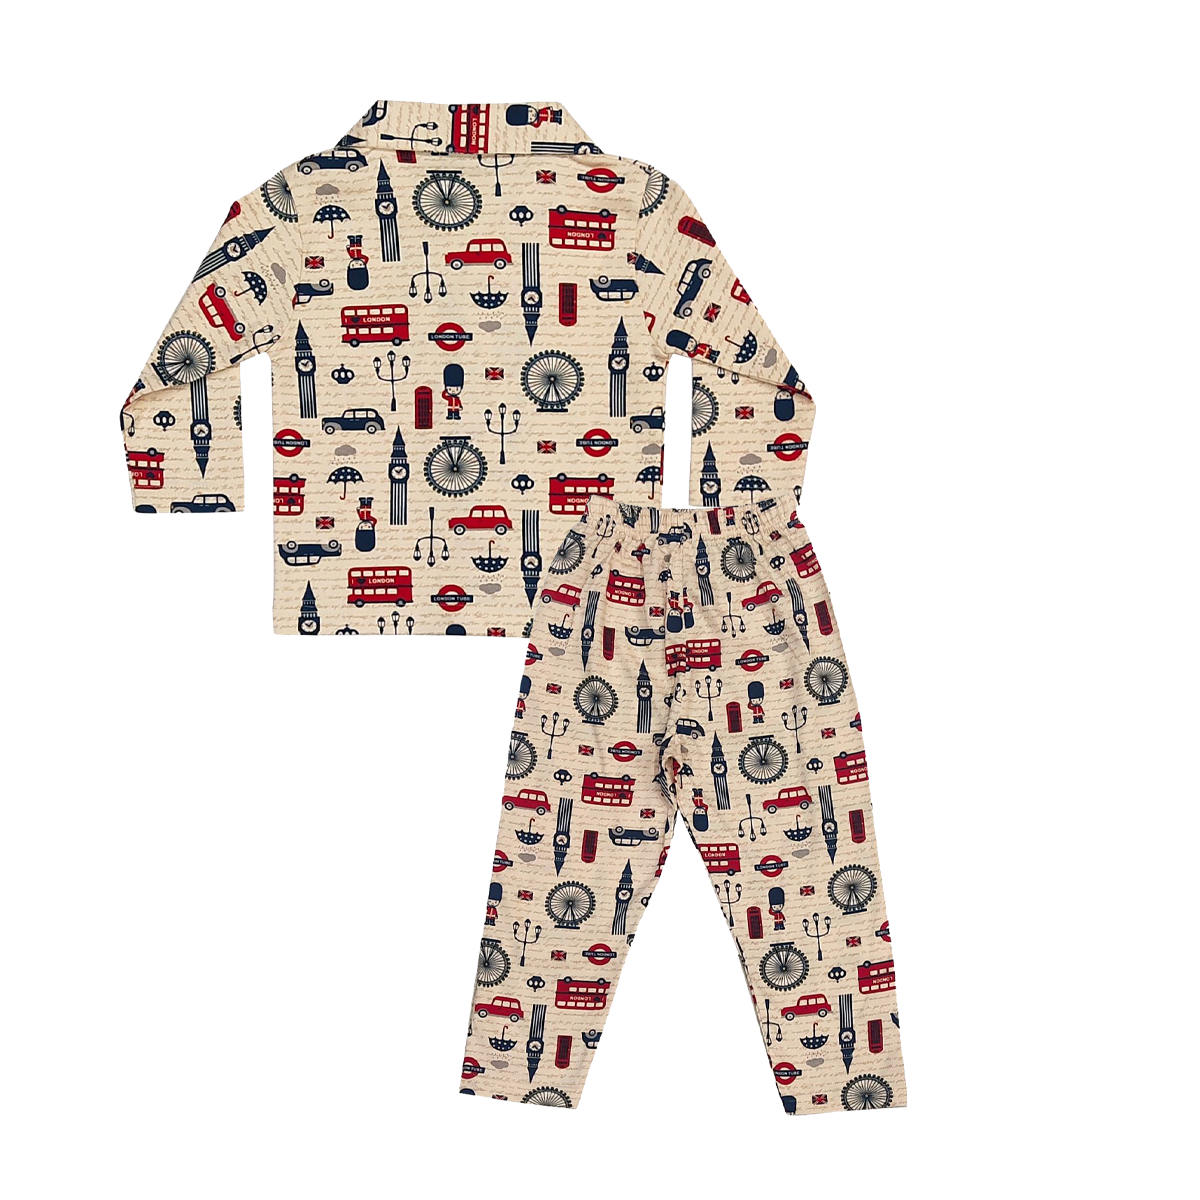 Full Sleeves Baby London Bus Printed Pajamas / Night Suit  for Baby/Kids - Cream